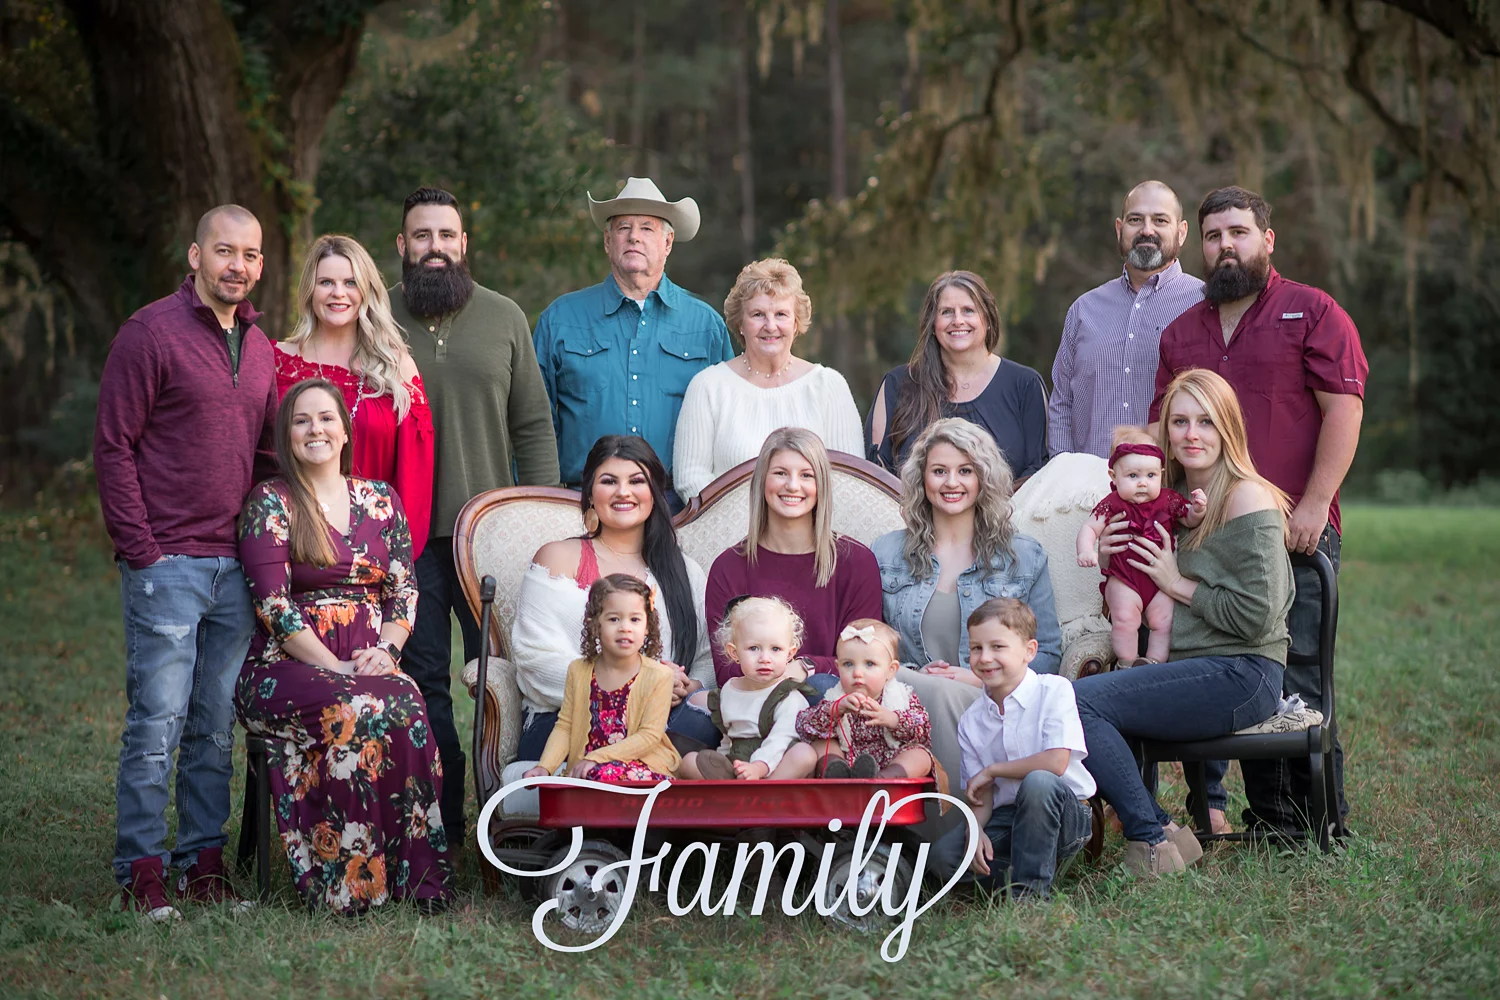 Family portrait photo taken by Lisa Rowland Photography in Trenton, Florida